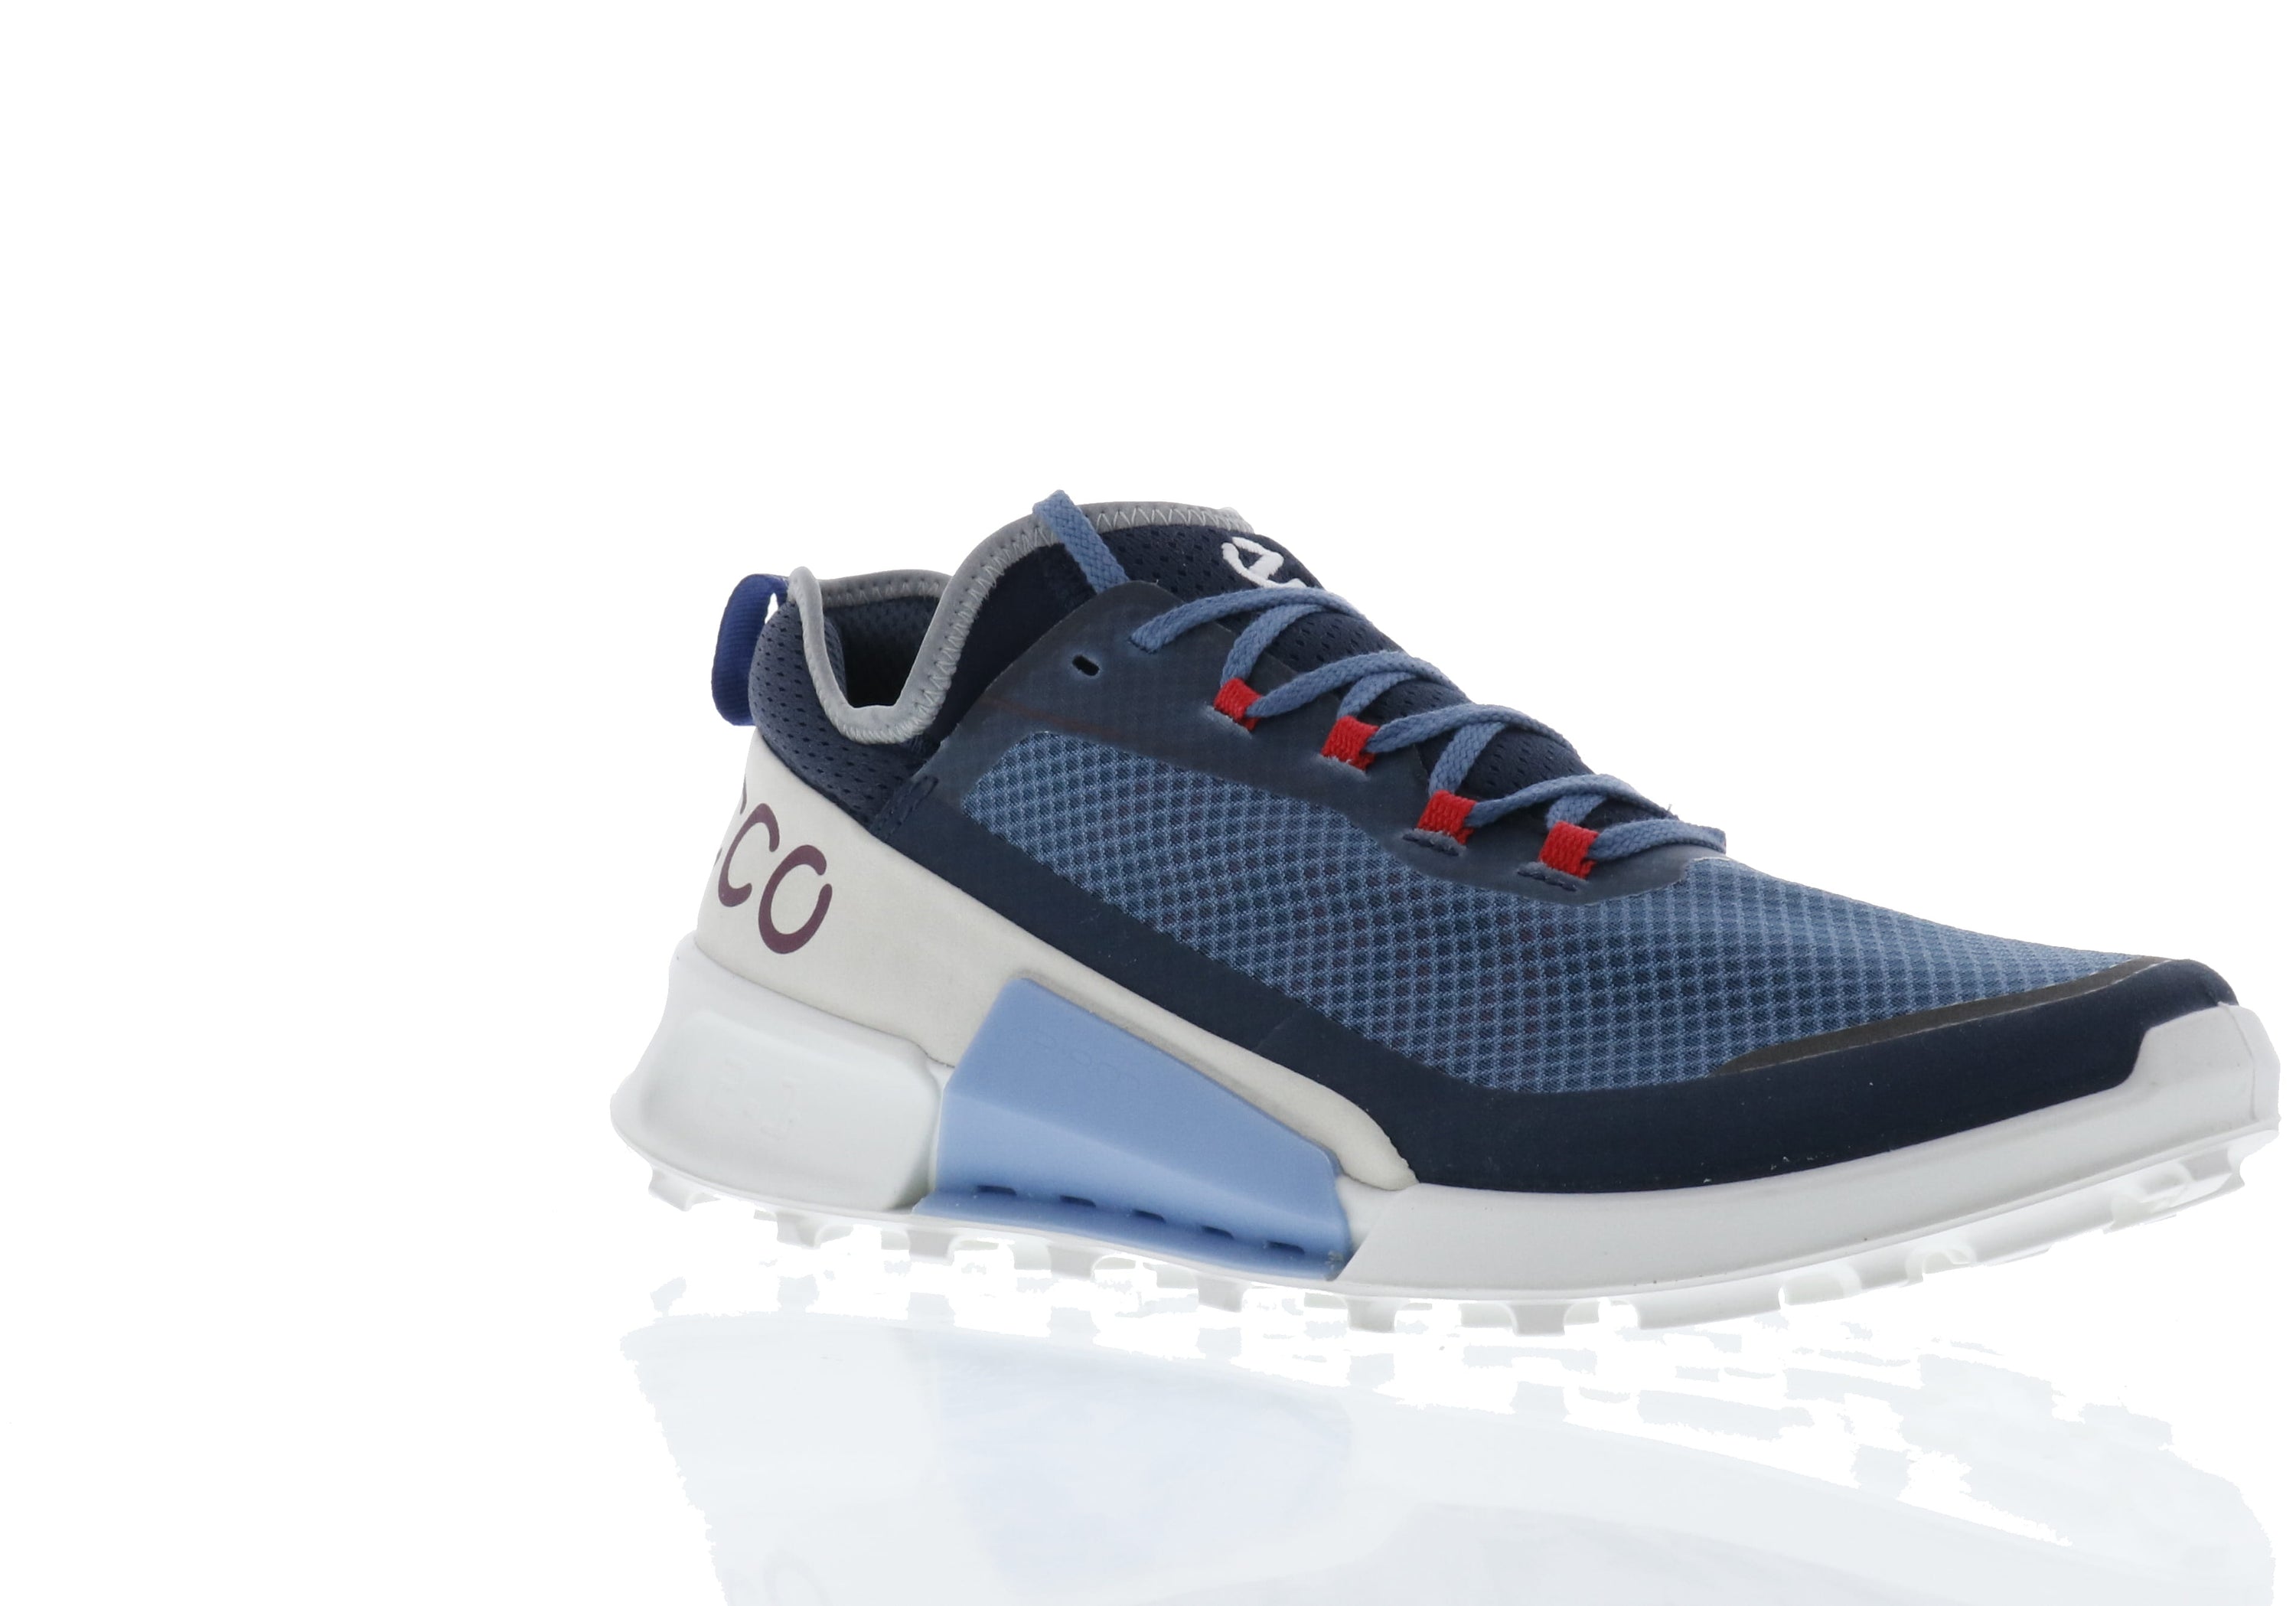 ECCO Biom 2.1X Country Sneaker (Men's) - Marine